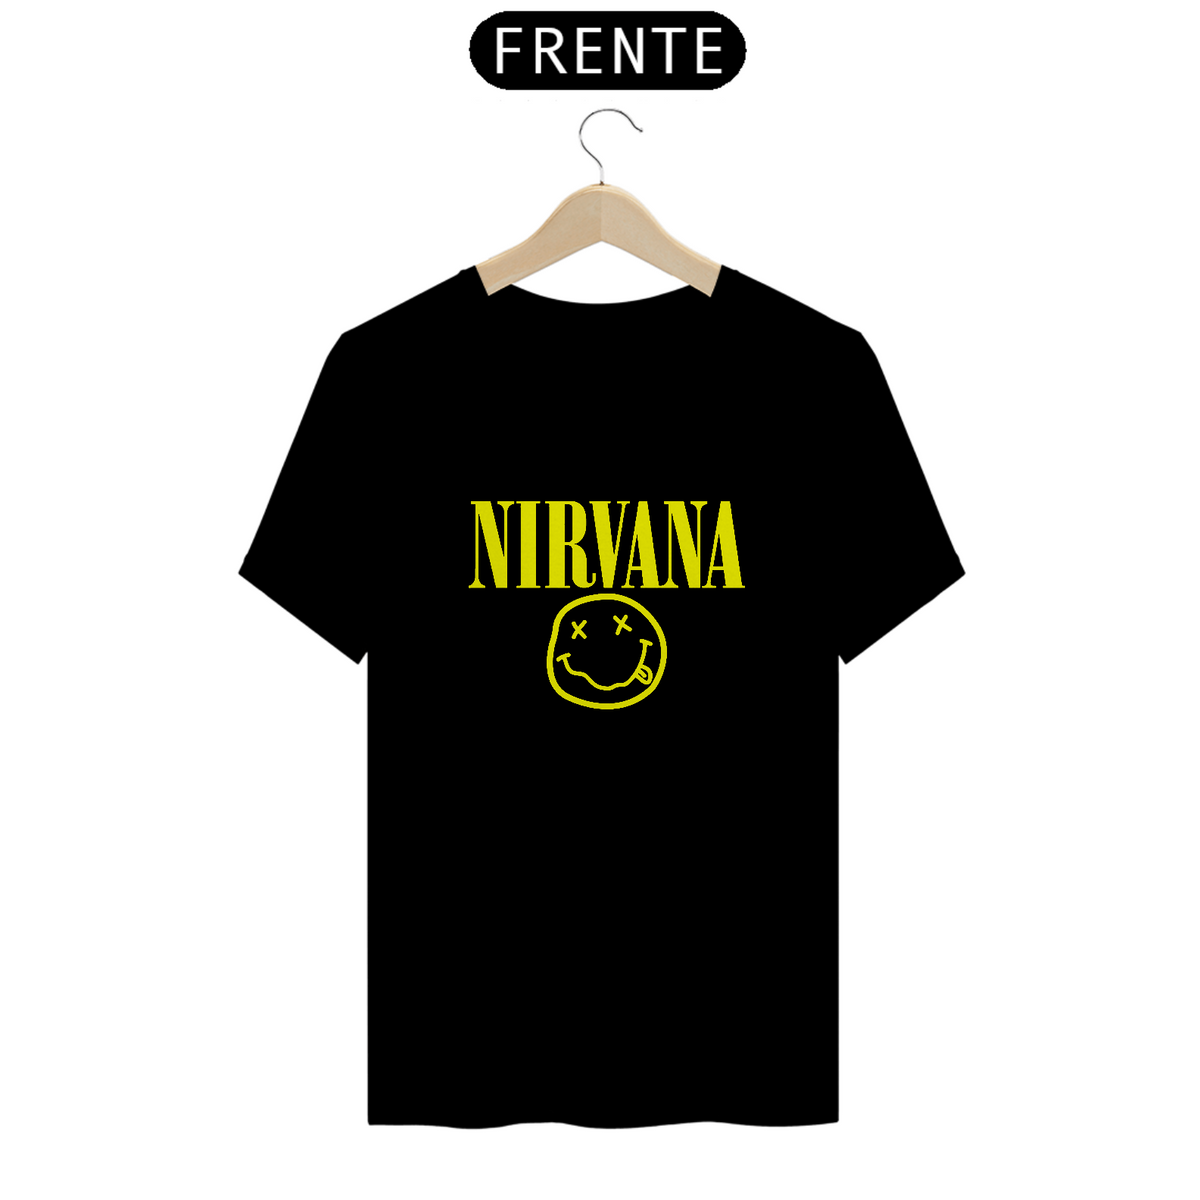 Nome do produto: Blusa - Nirvana